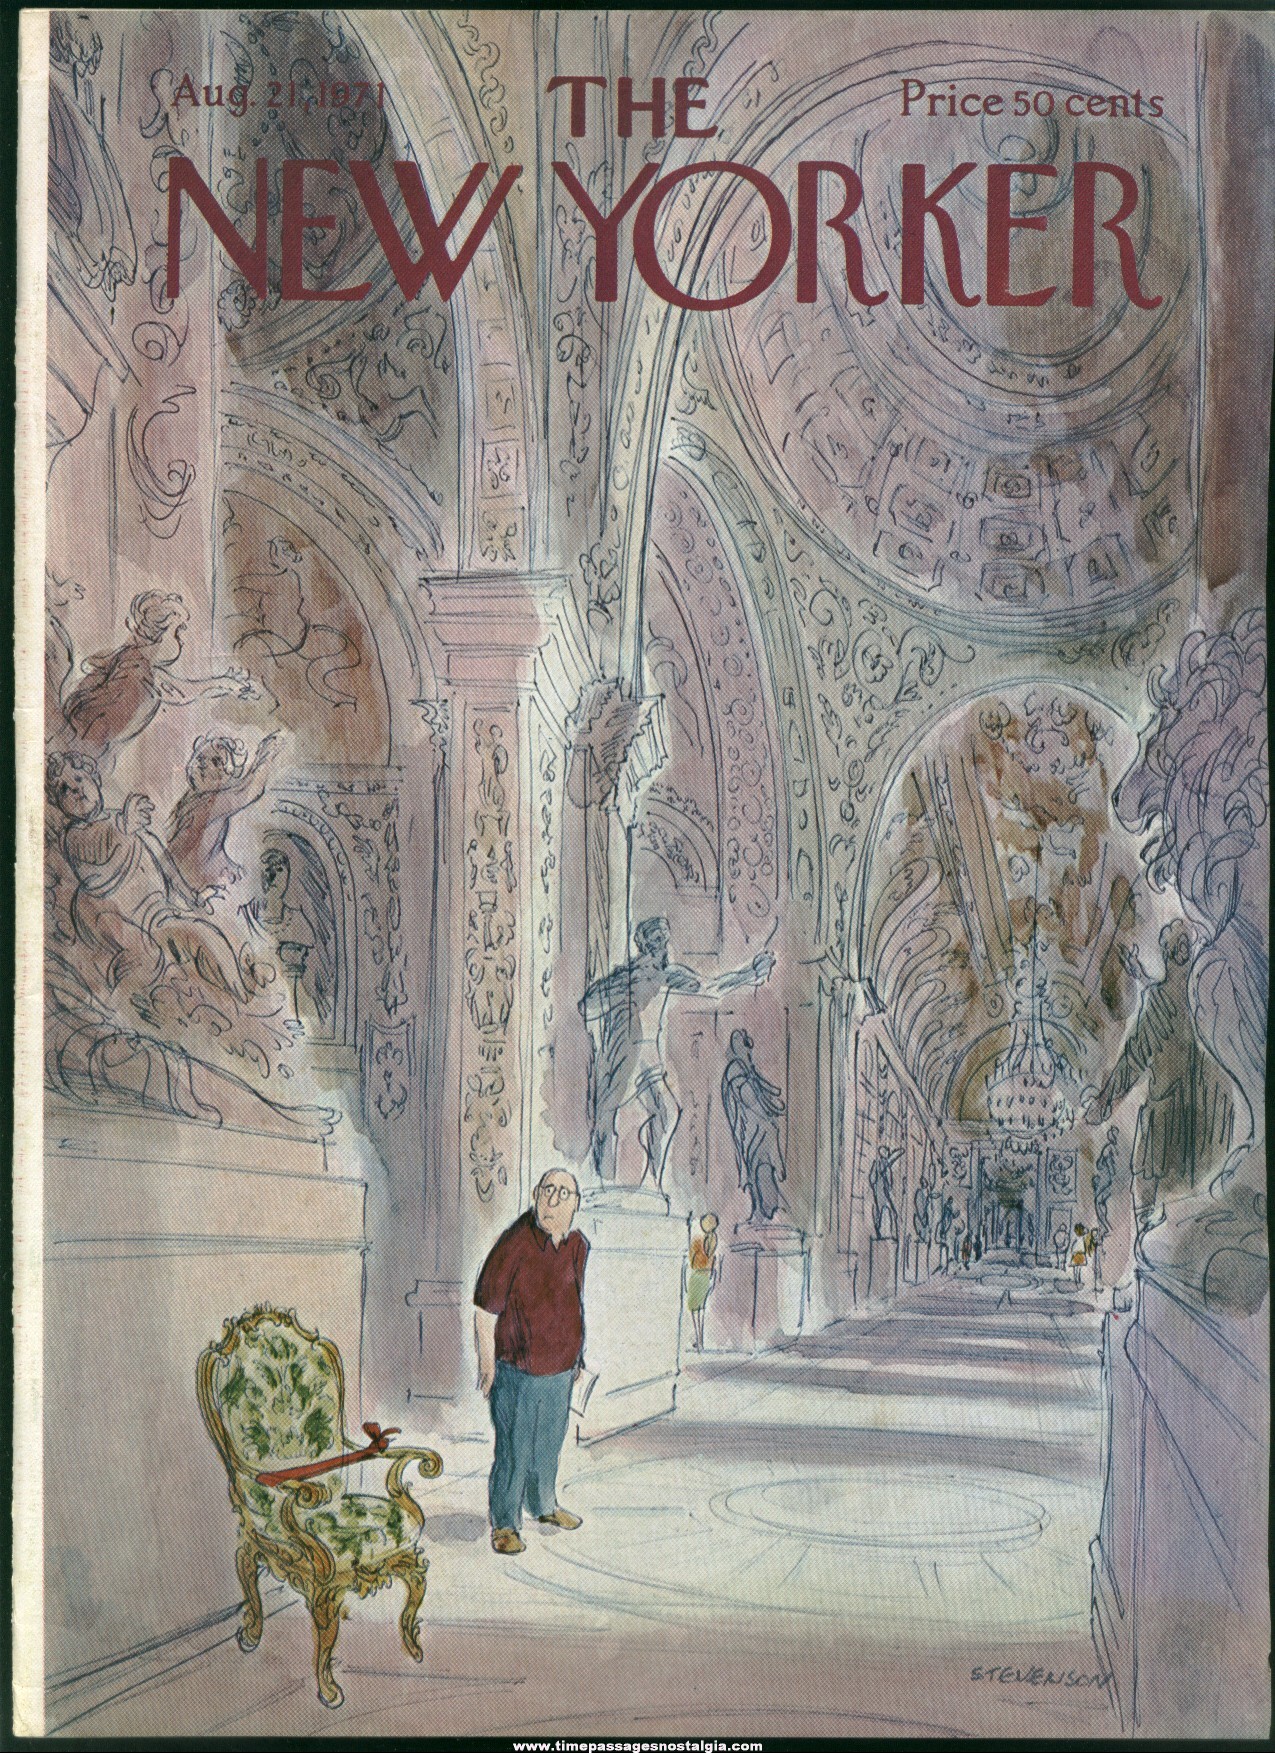 New Yorker Magazine - August 21, 1971 - Cover by James Stevenson